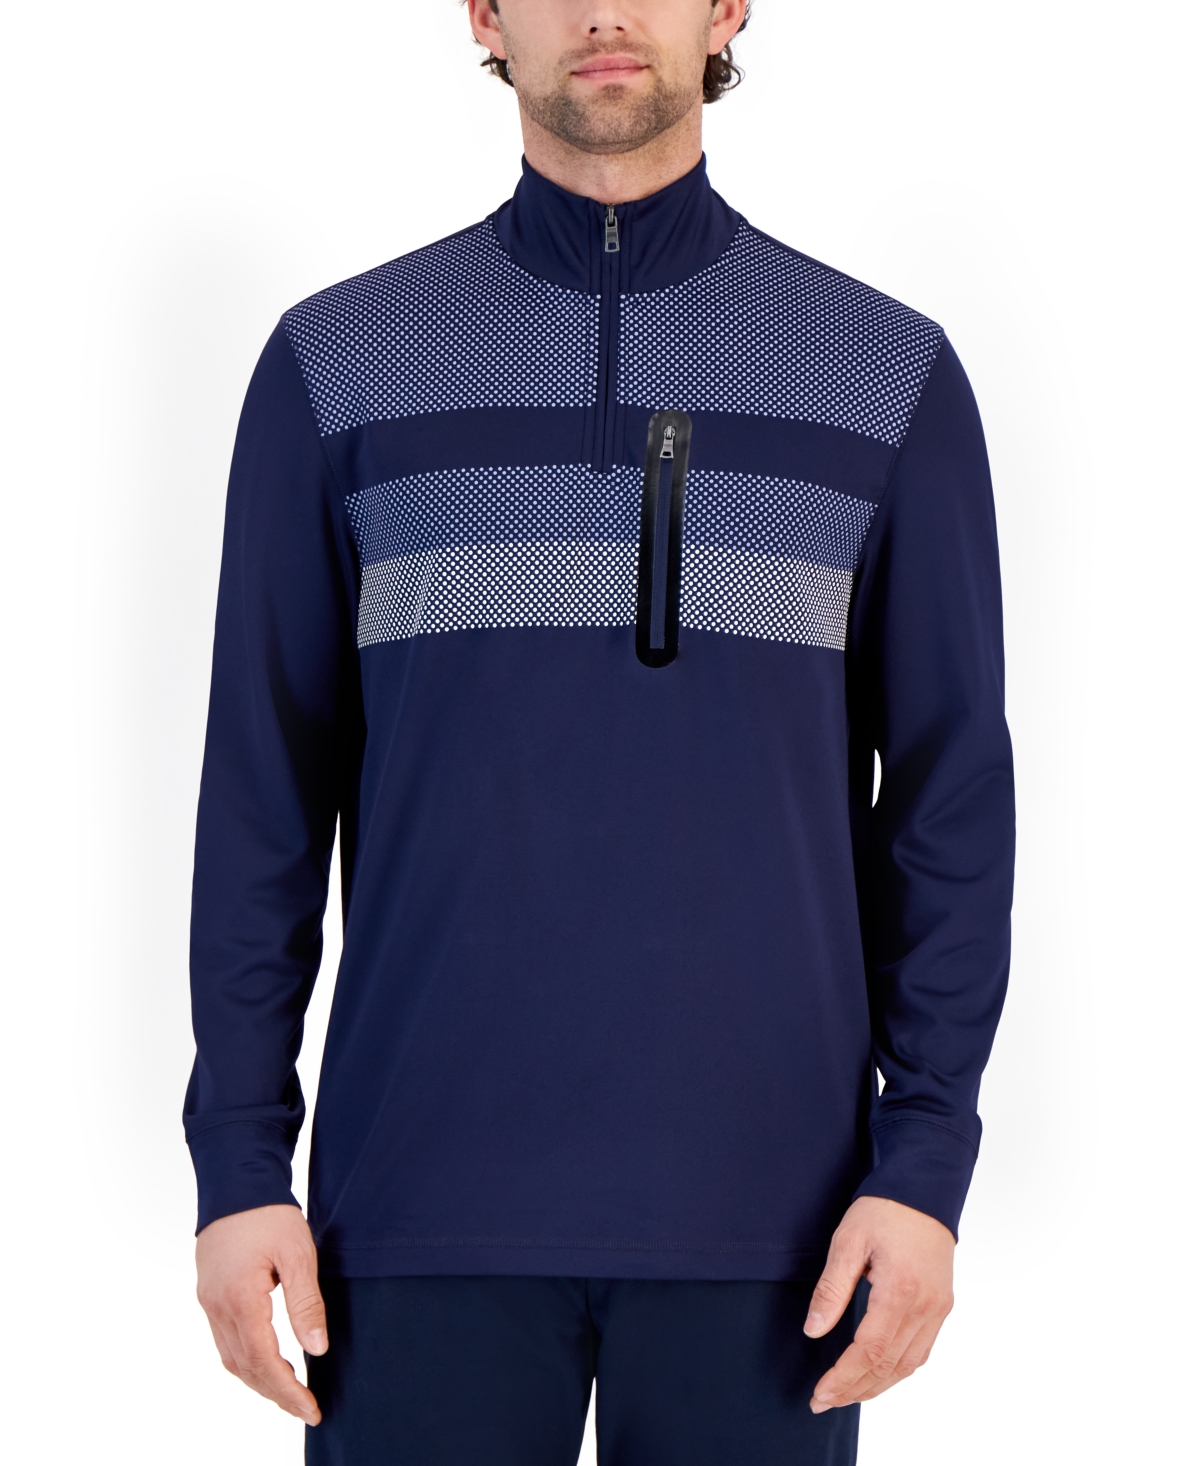 Men's Quarter-Zip Shirt, Created for Macy's - Navy Blue